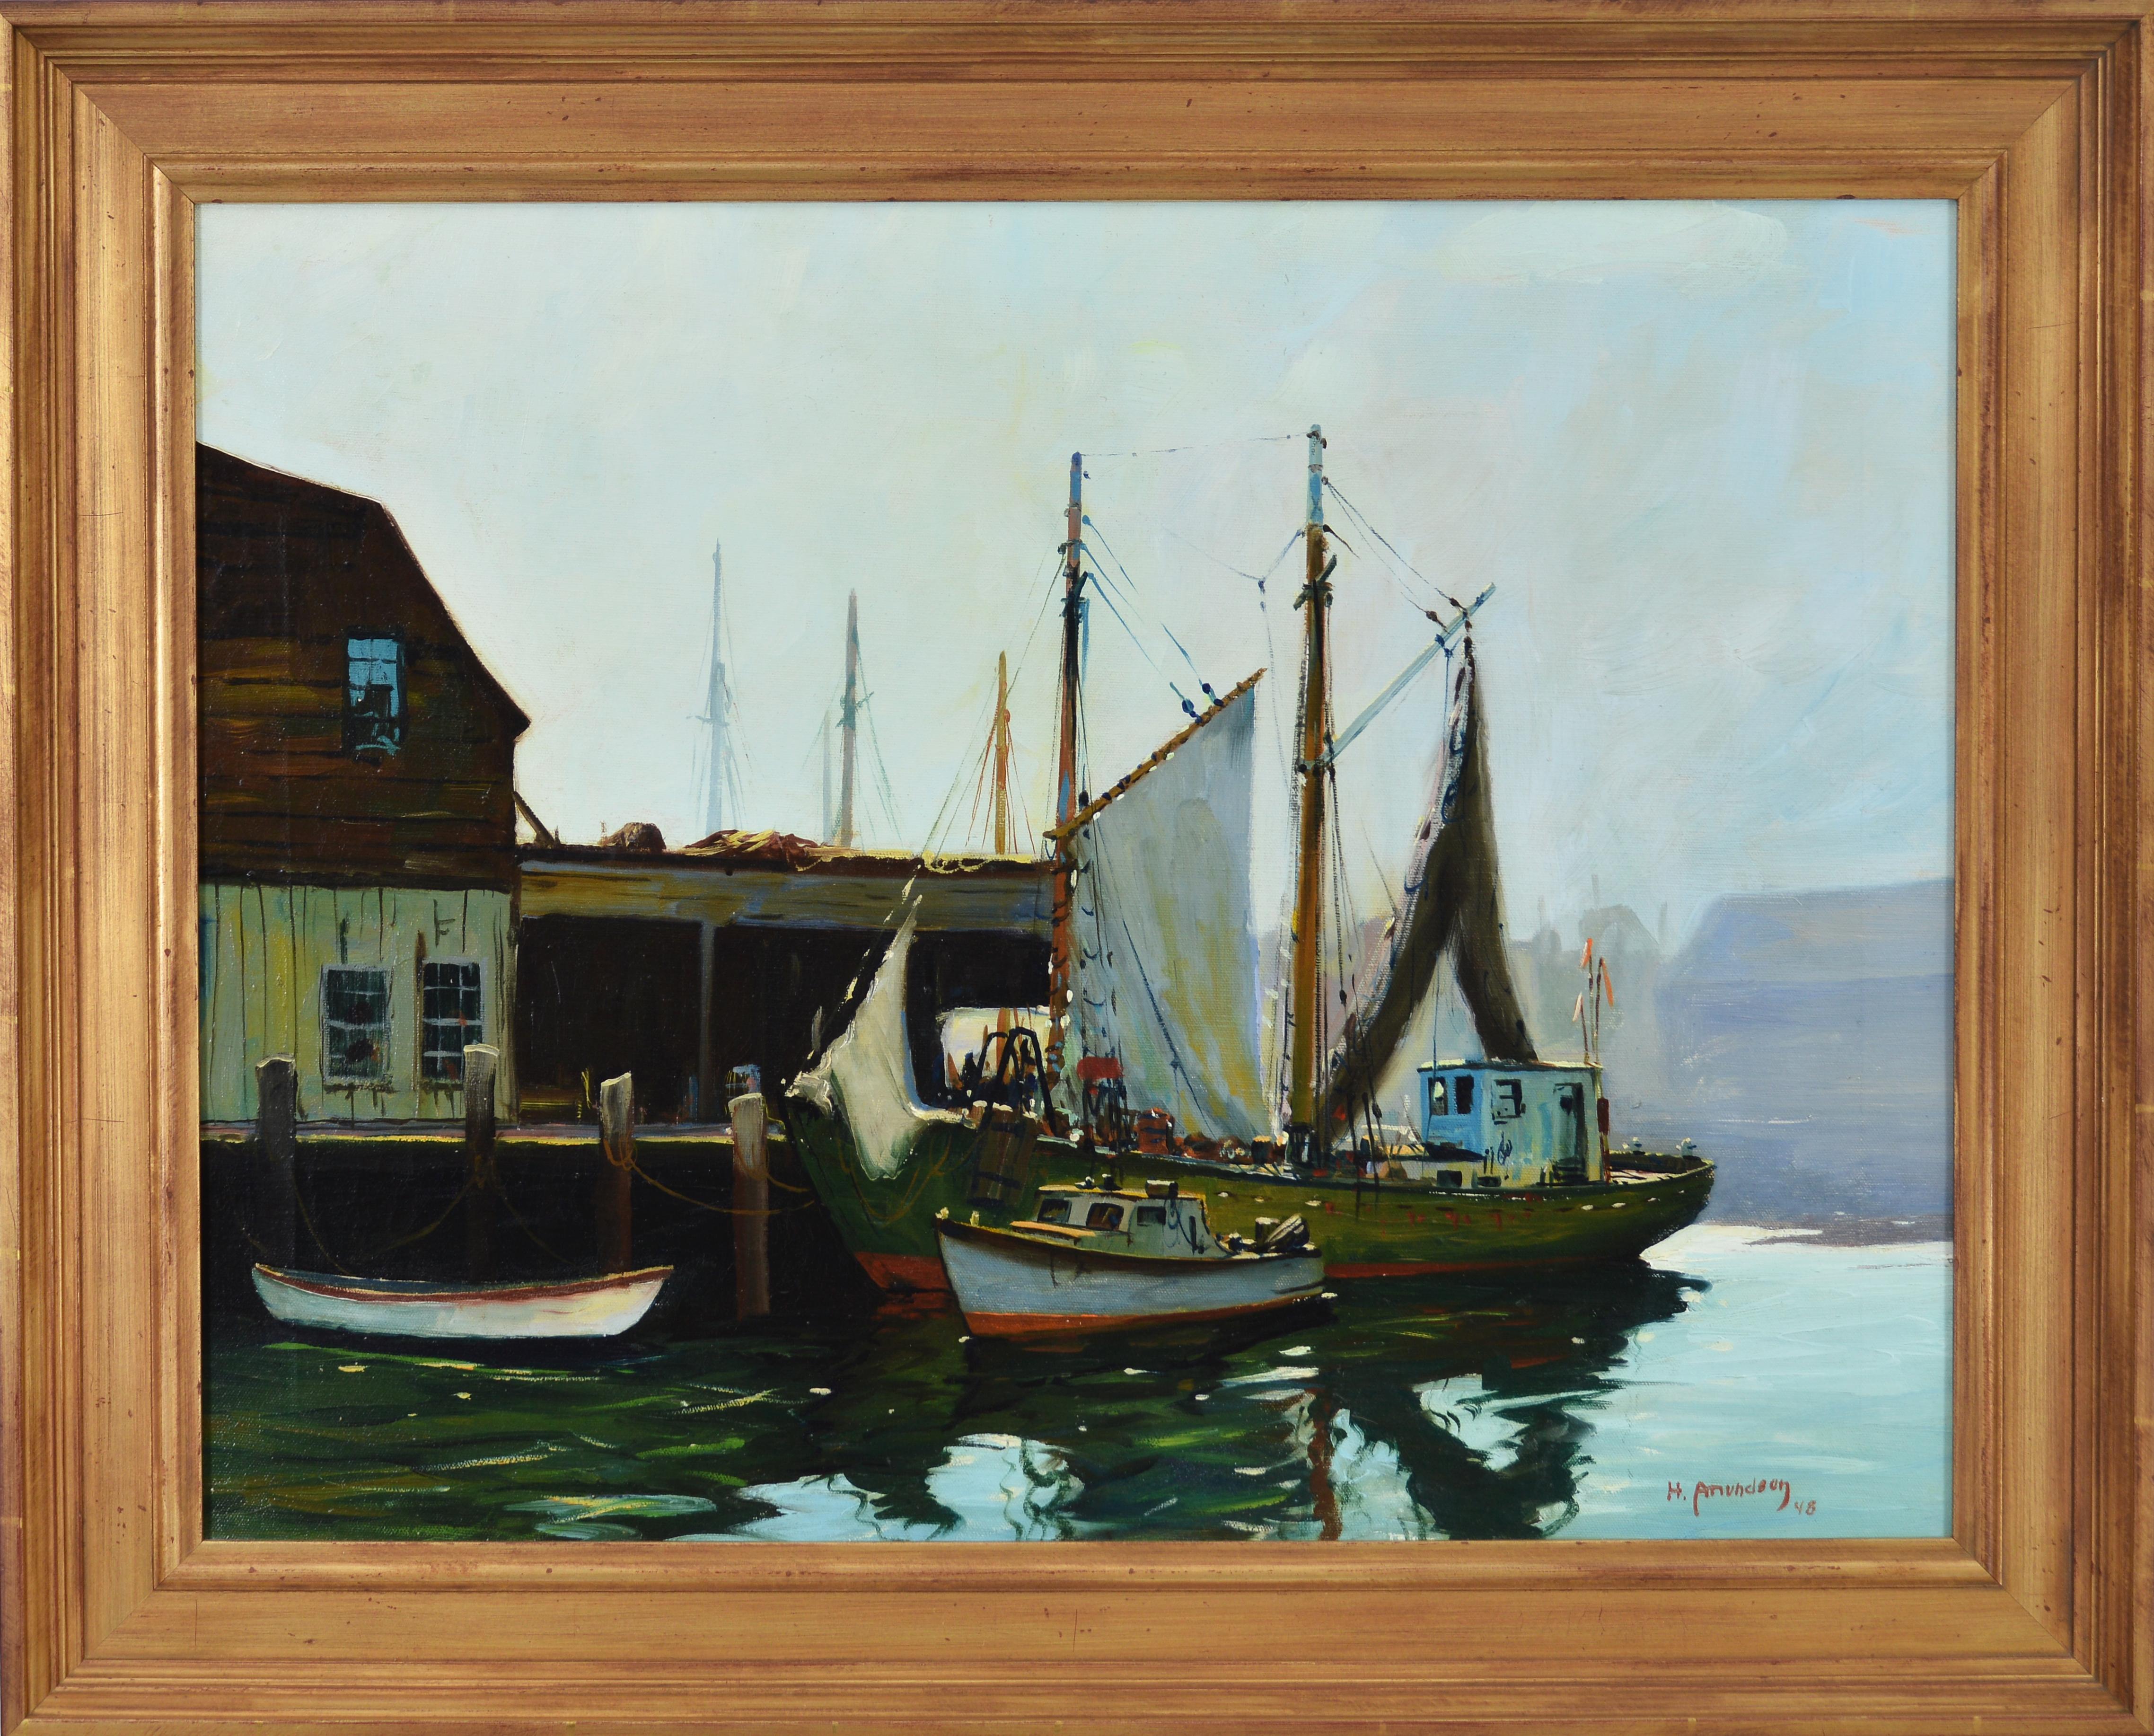 Boats at Dock - Painting by C. Hjalmar Amundsen 